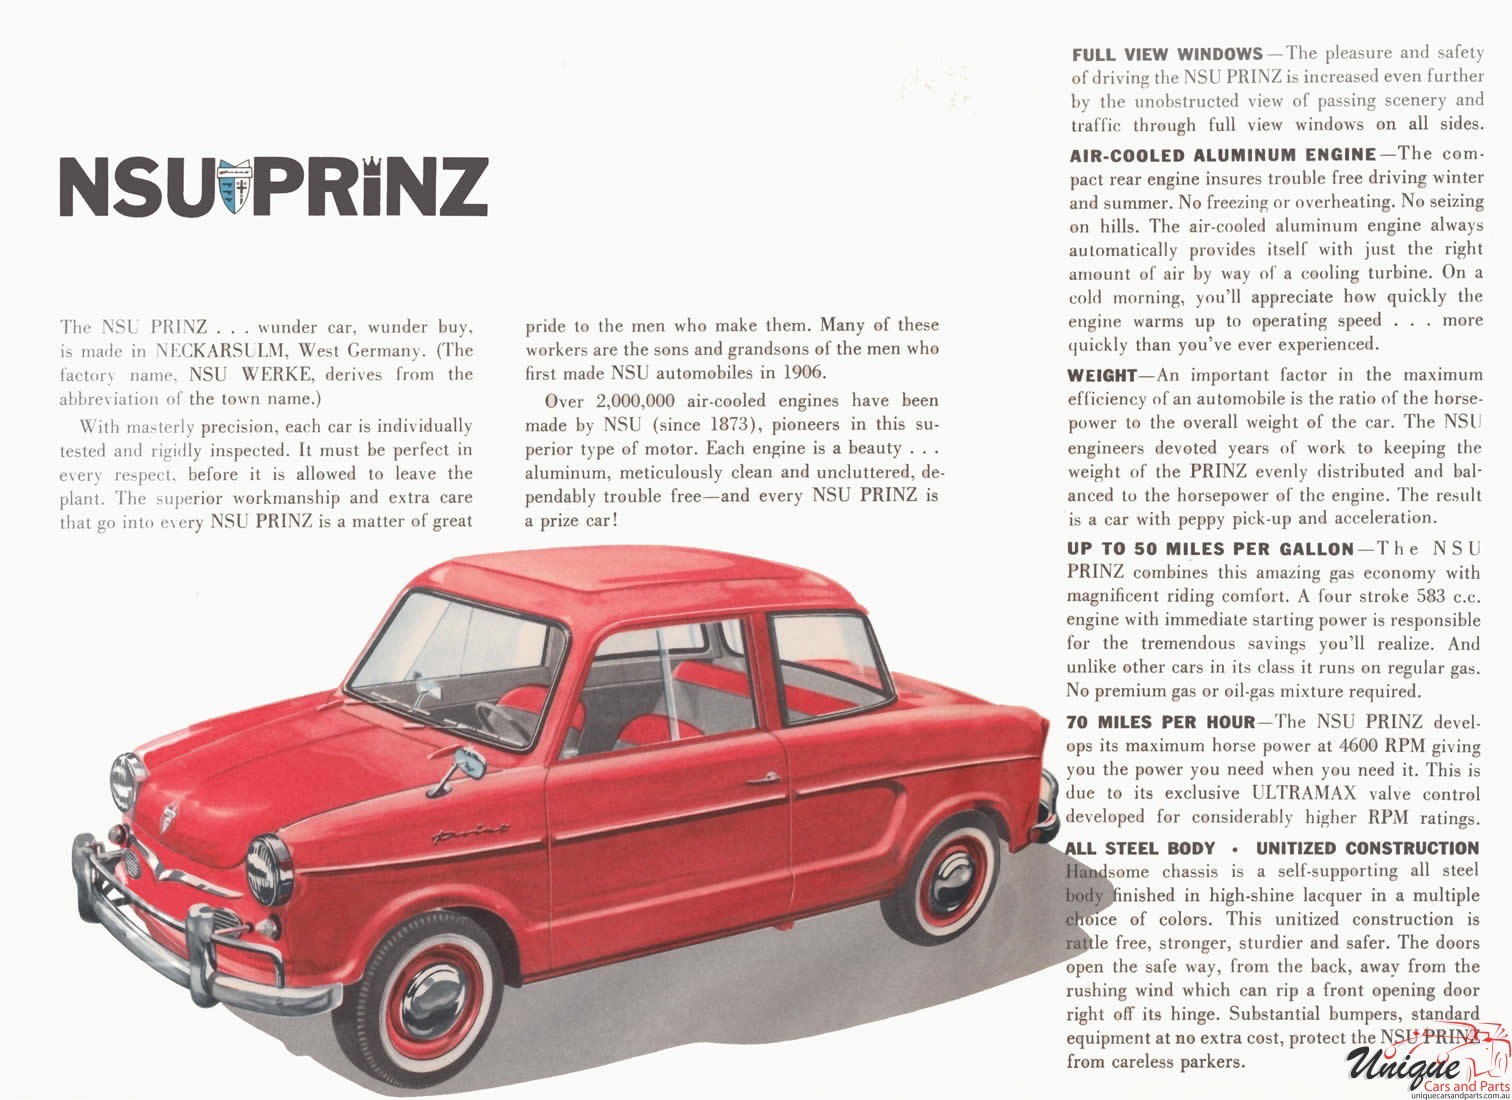 1958 NSU Prinz Brochure Page 7